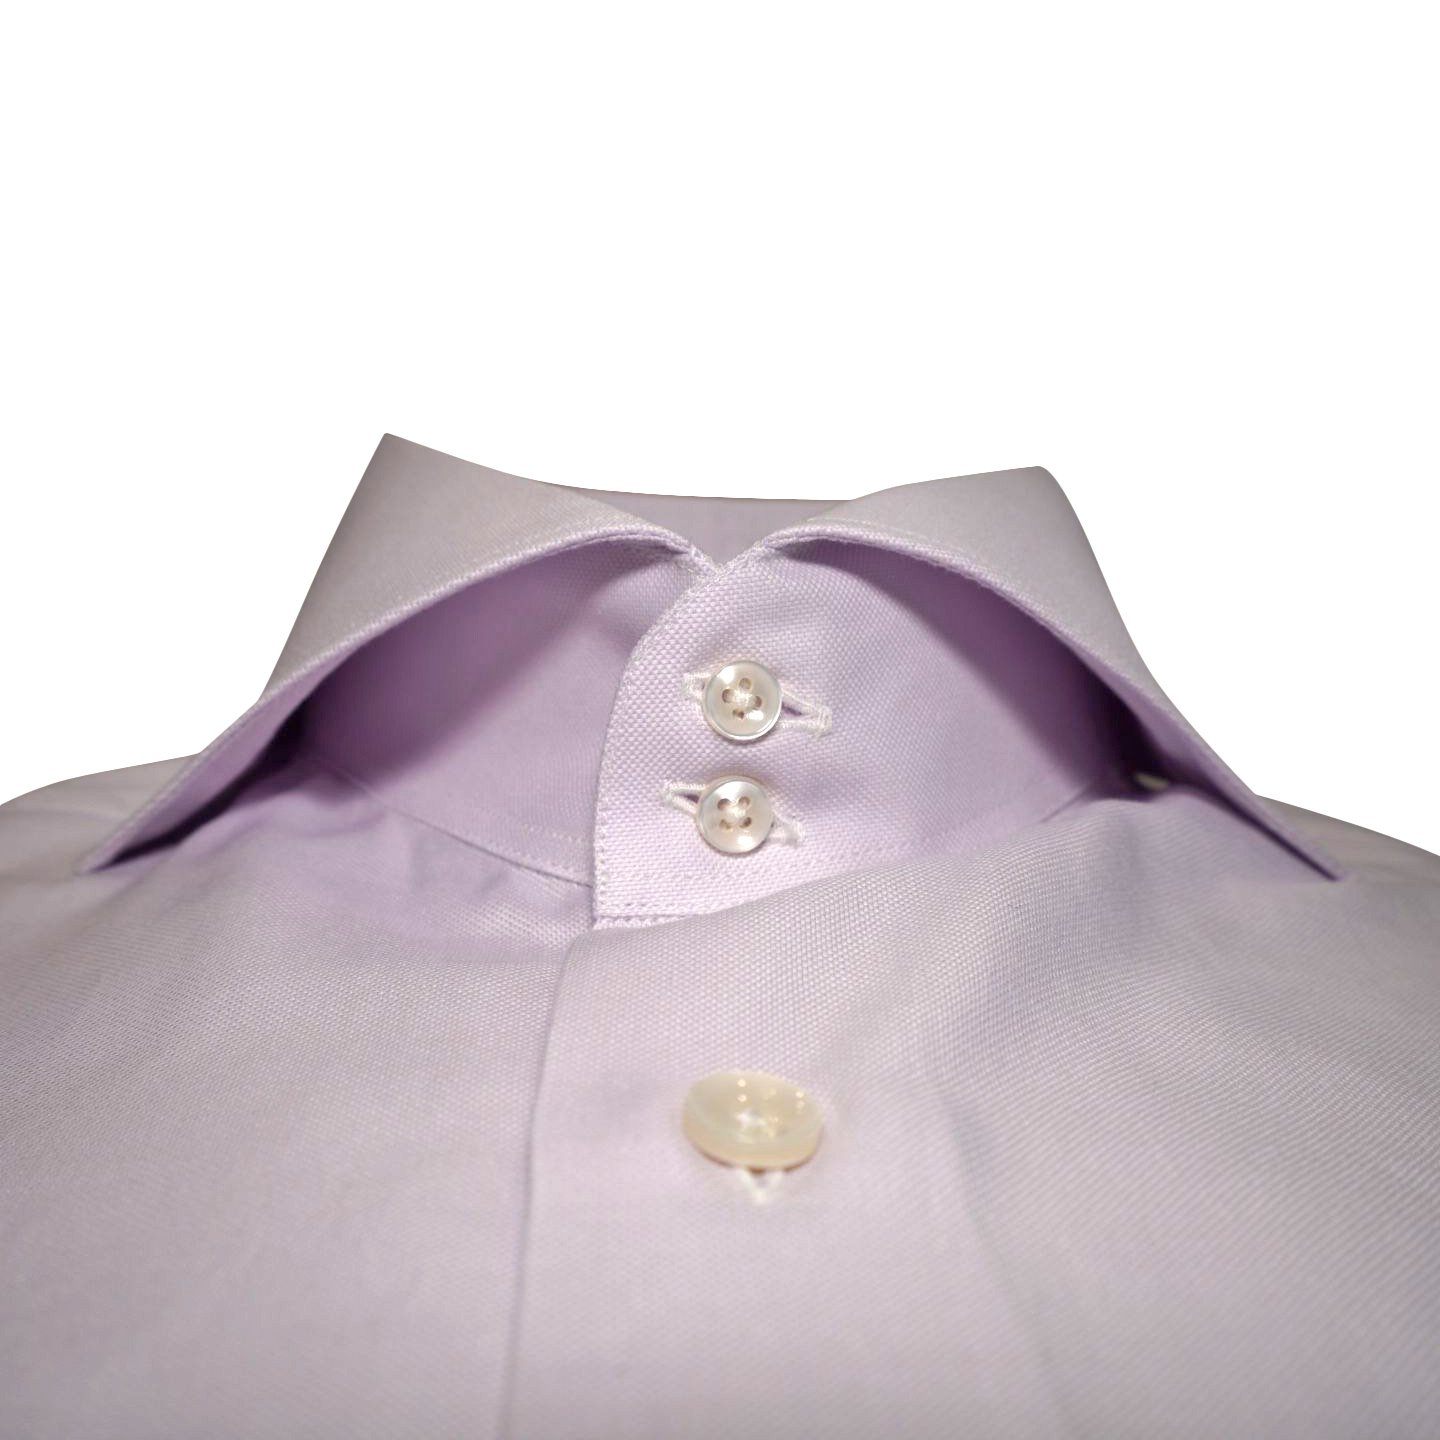 Lavender Oxford Dress Shirt